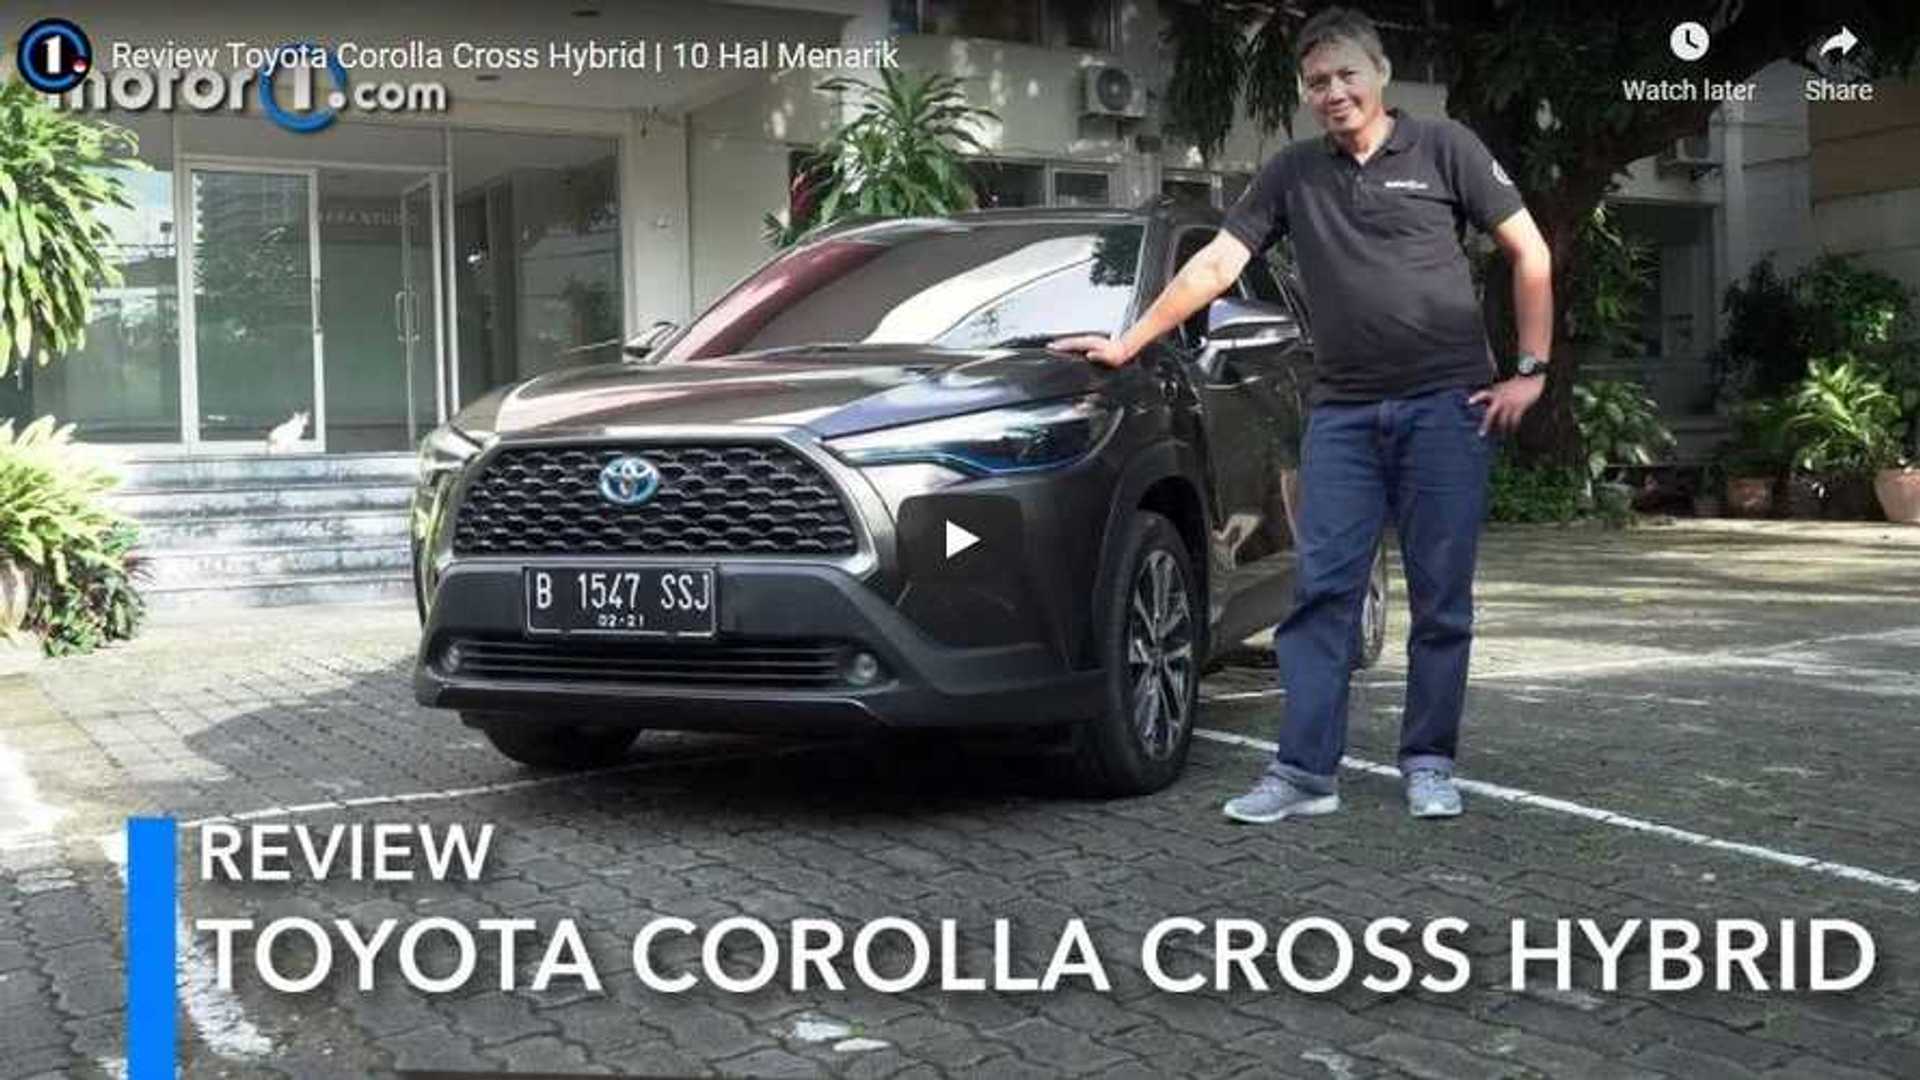 Harga Toyota Corolla Cross Hybrid 2020. 10 Hal Menarik Toyota Corolla Cross Hybrid, Bukan Cuma soal Harga